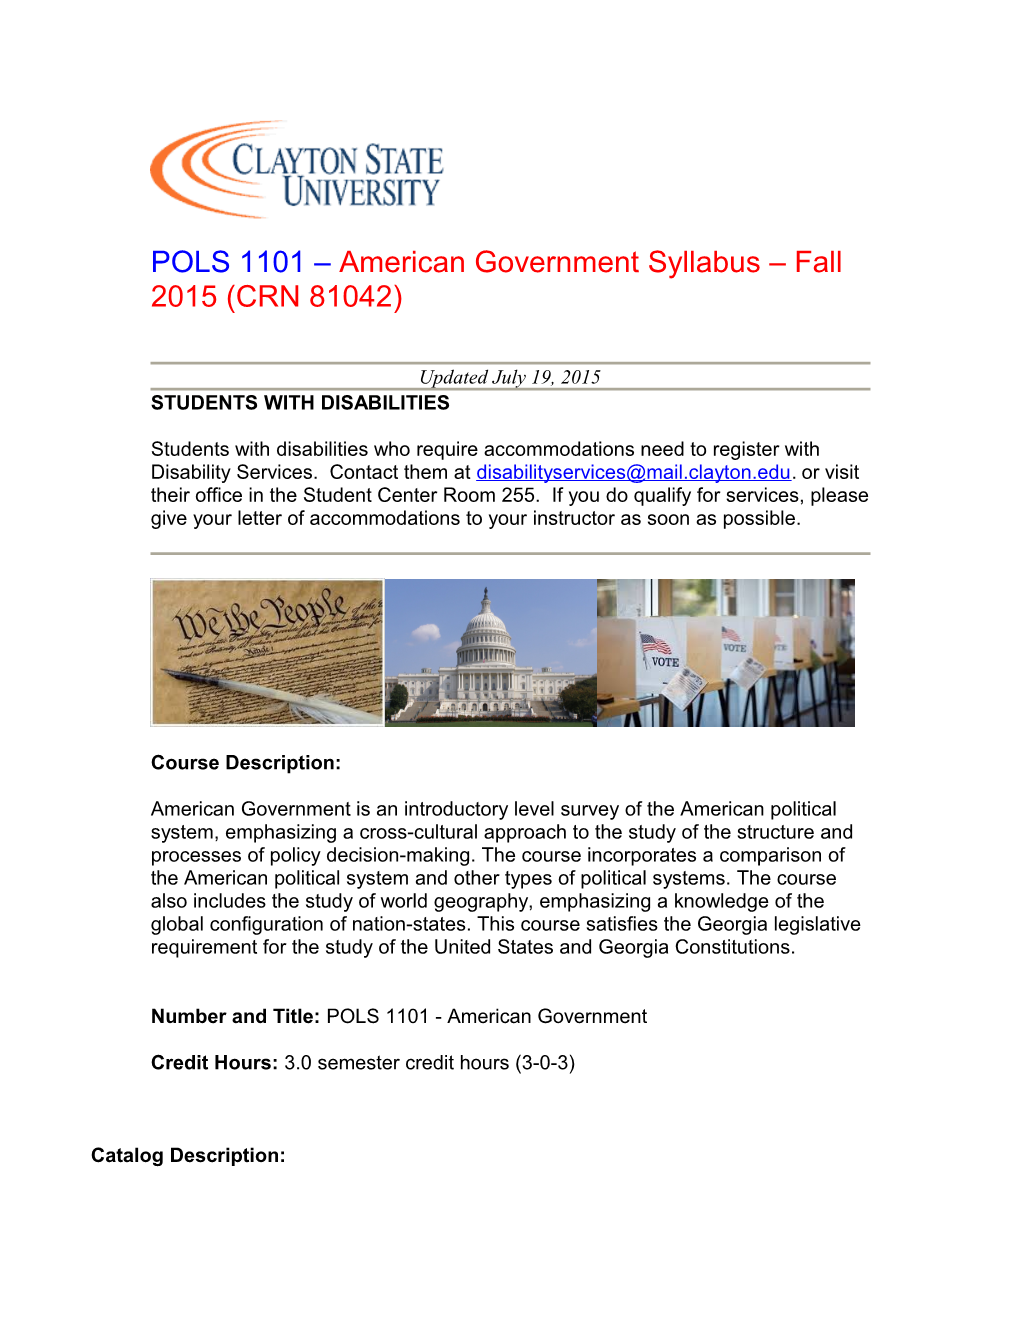 POLS1101 American Government Syllabus Fall 2015(CRN 81042)